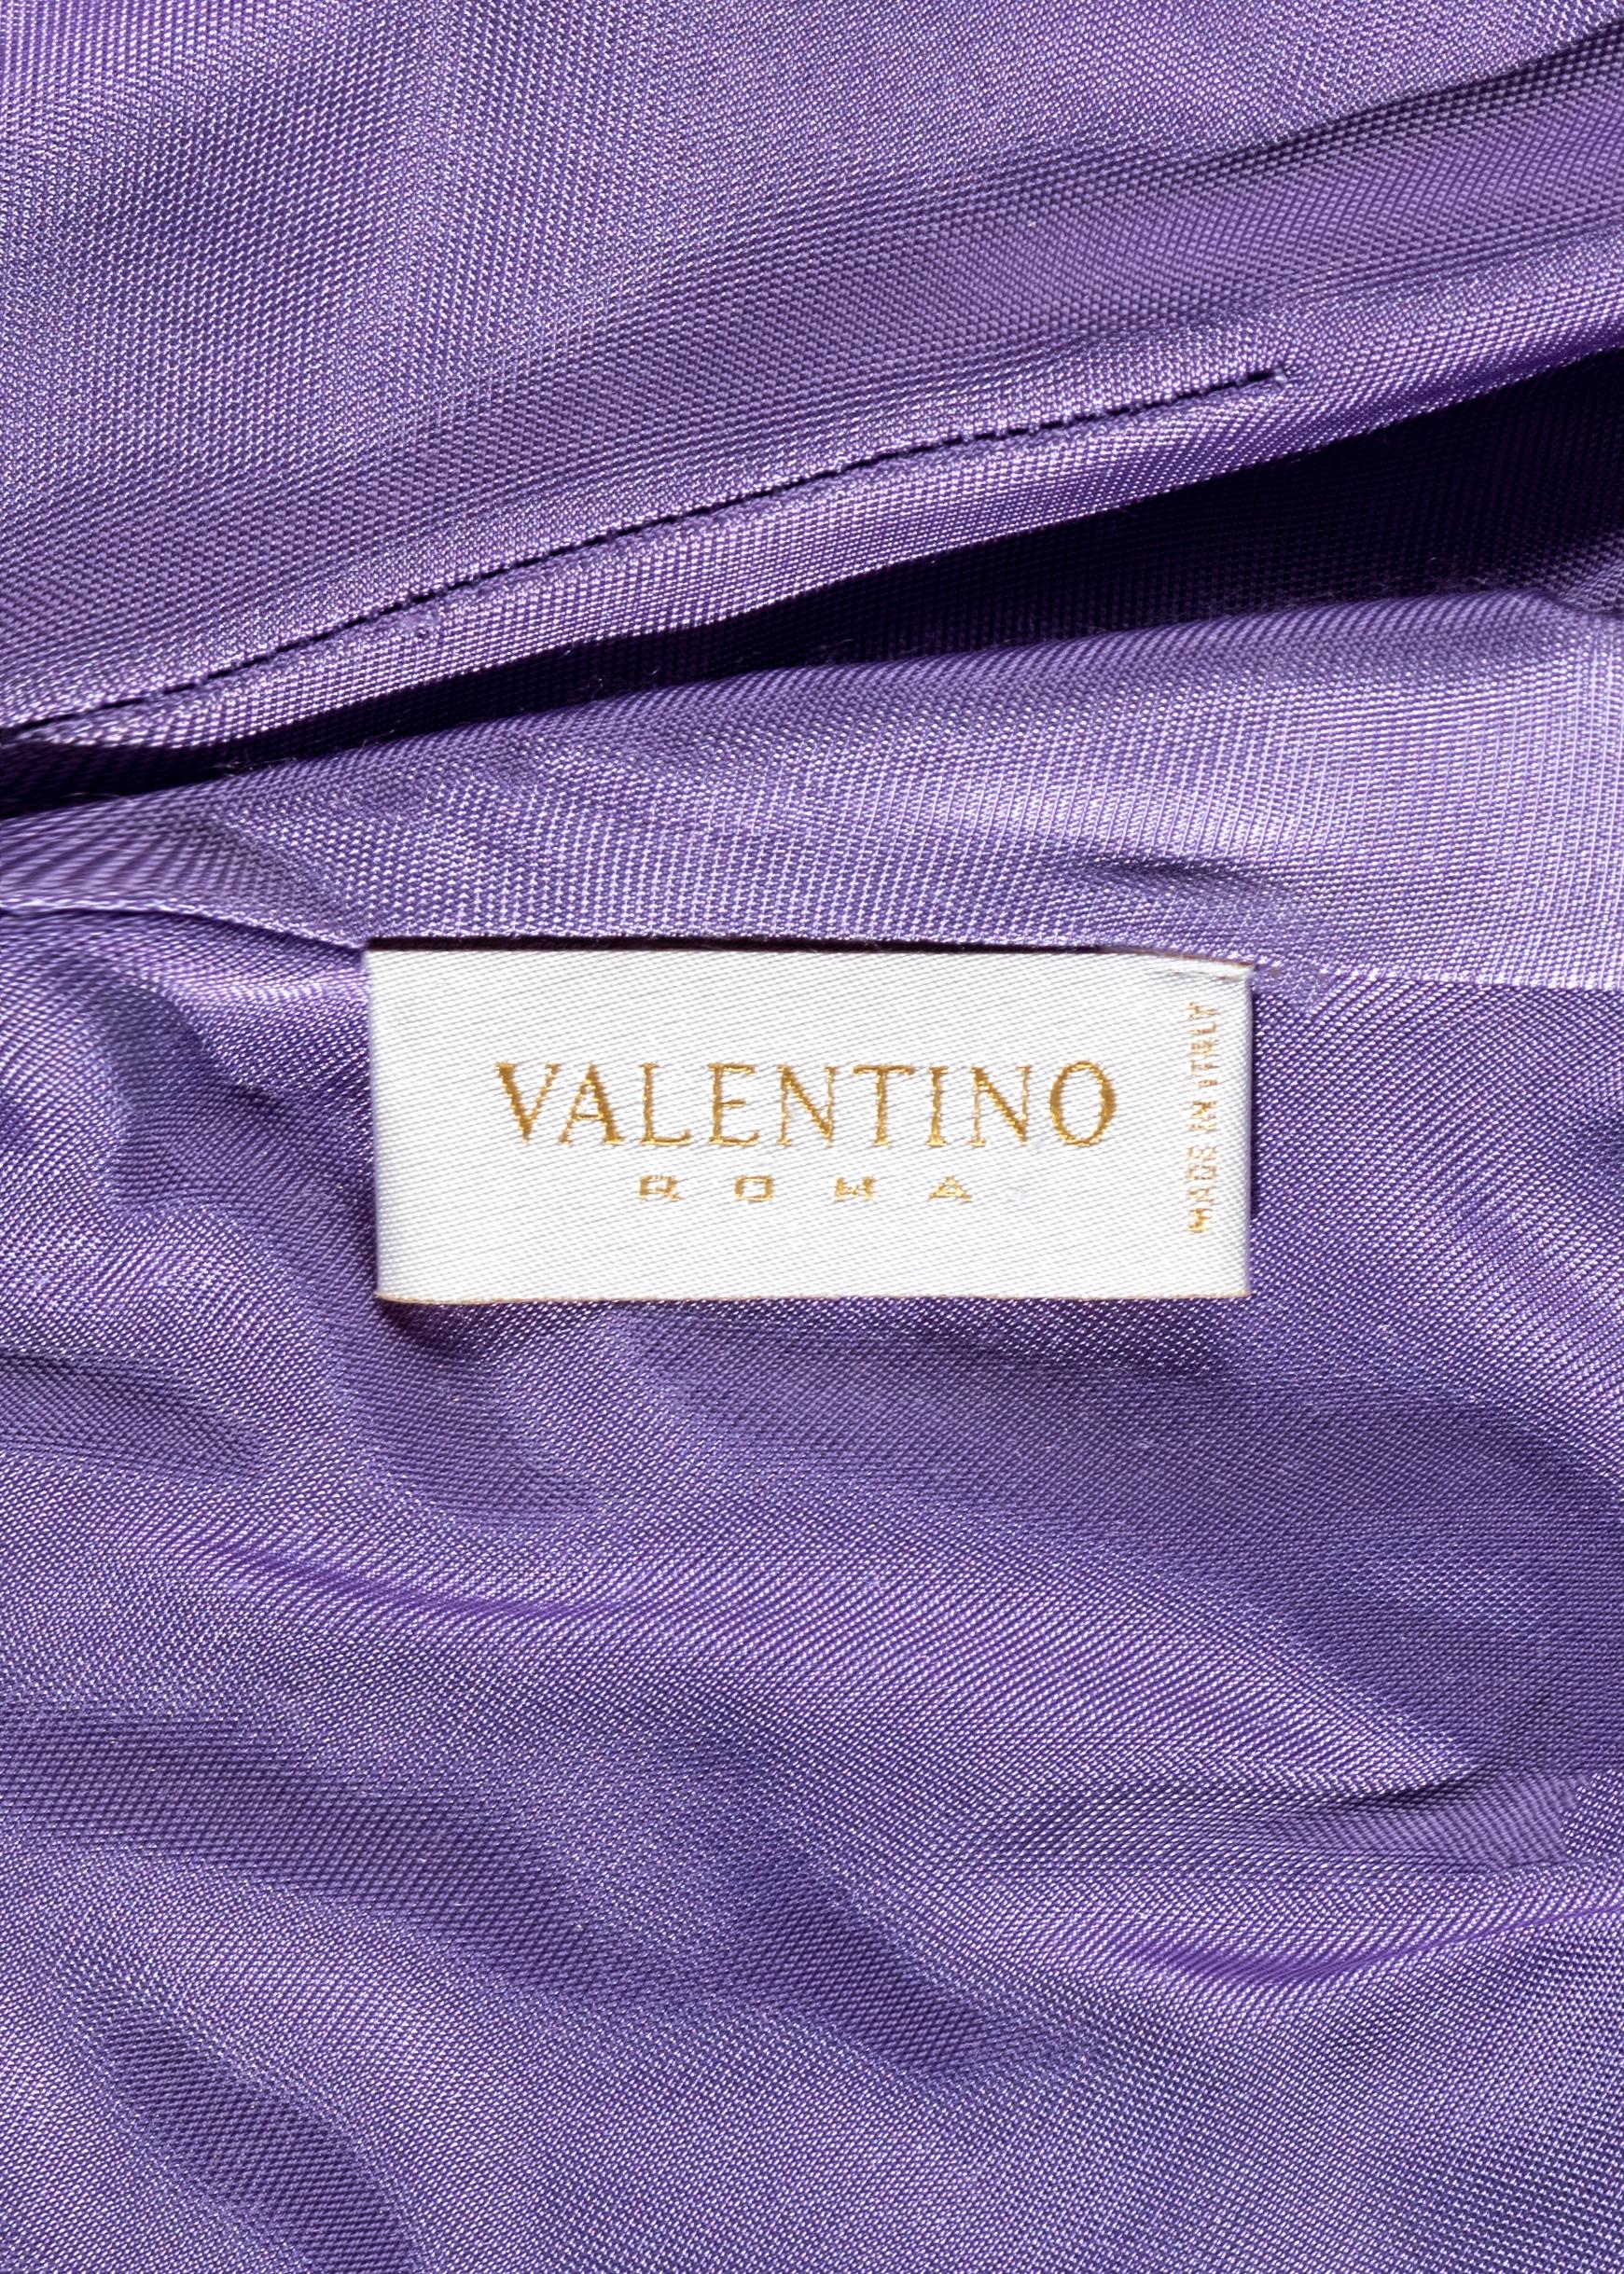 Valentino purple viscose open back dress with ties, c. 2000 5